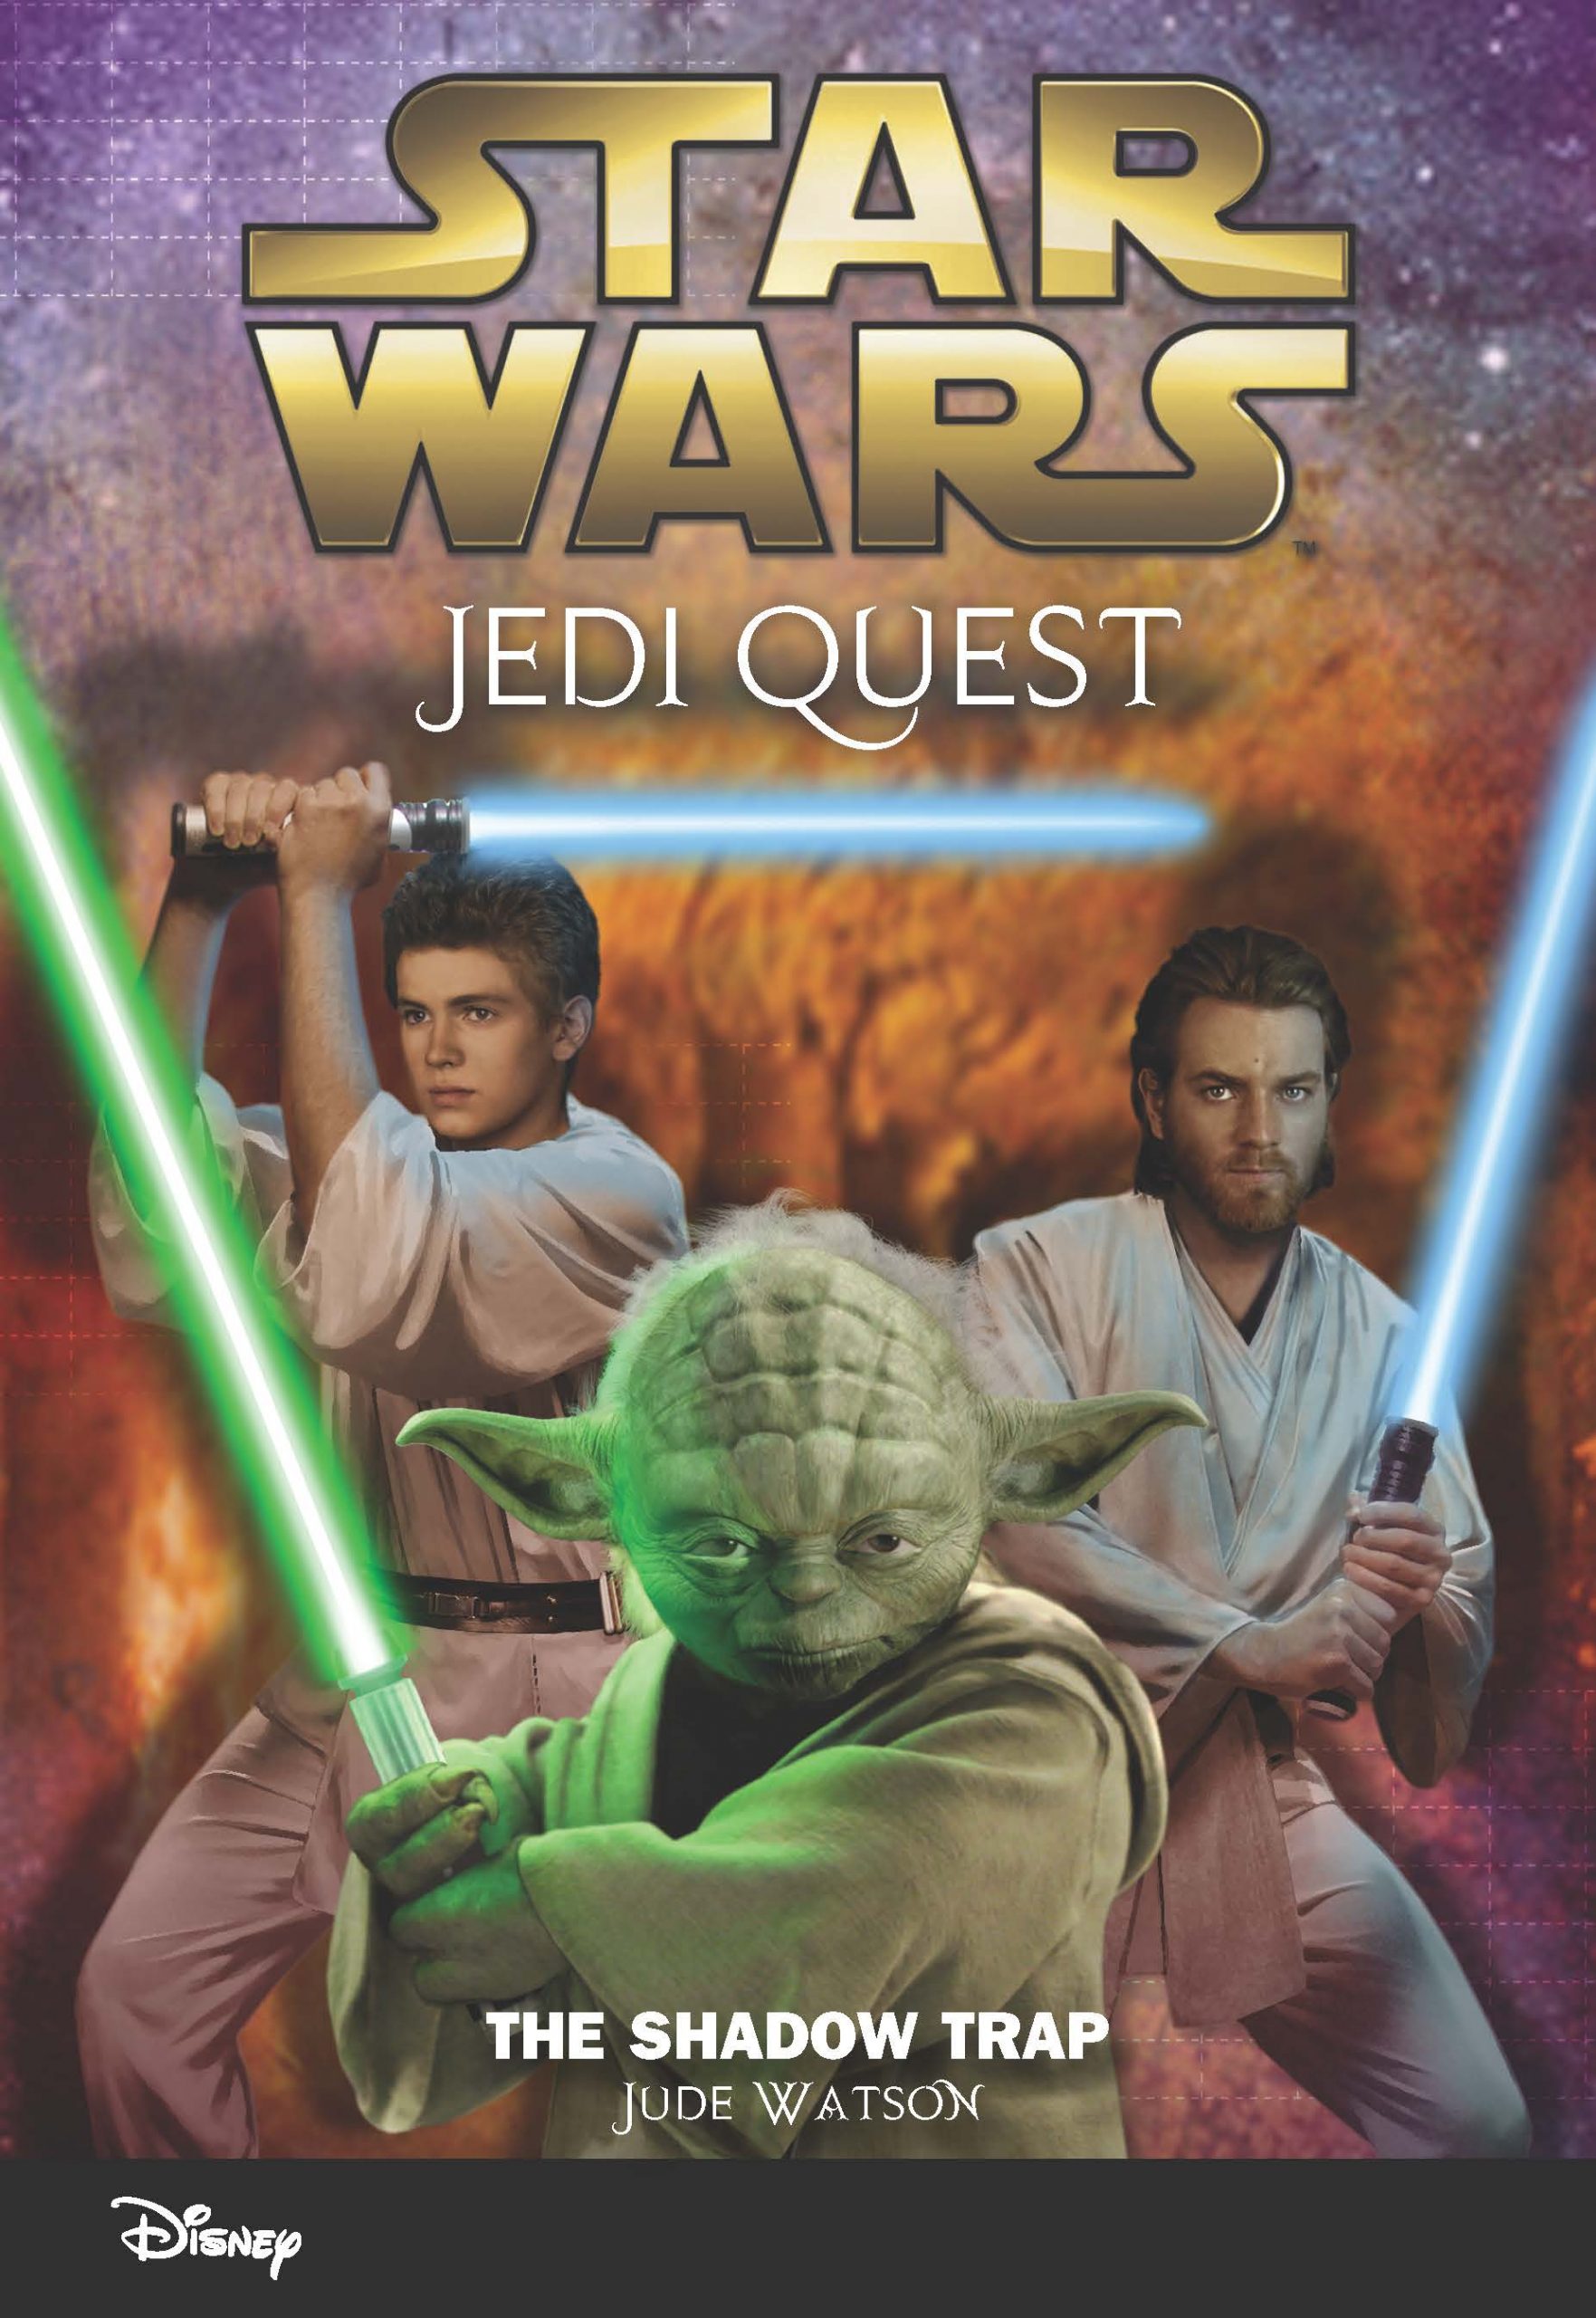 Star Wars: Last of the Jedi Book 1: The Desperate Mission (preview